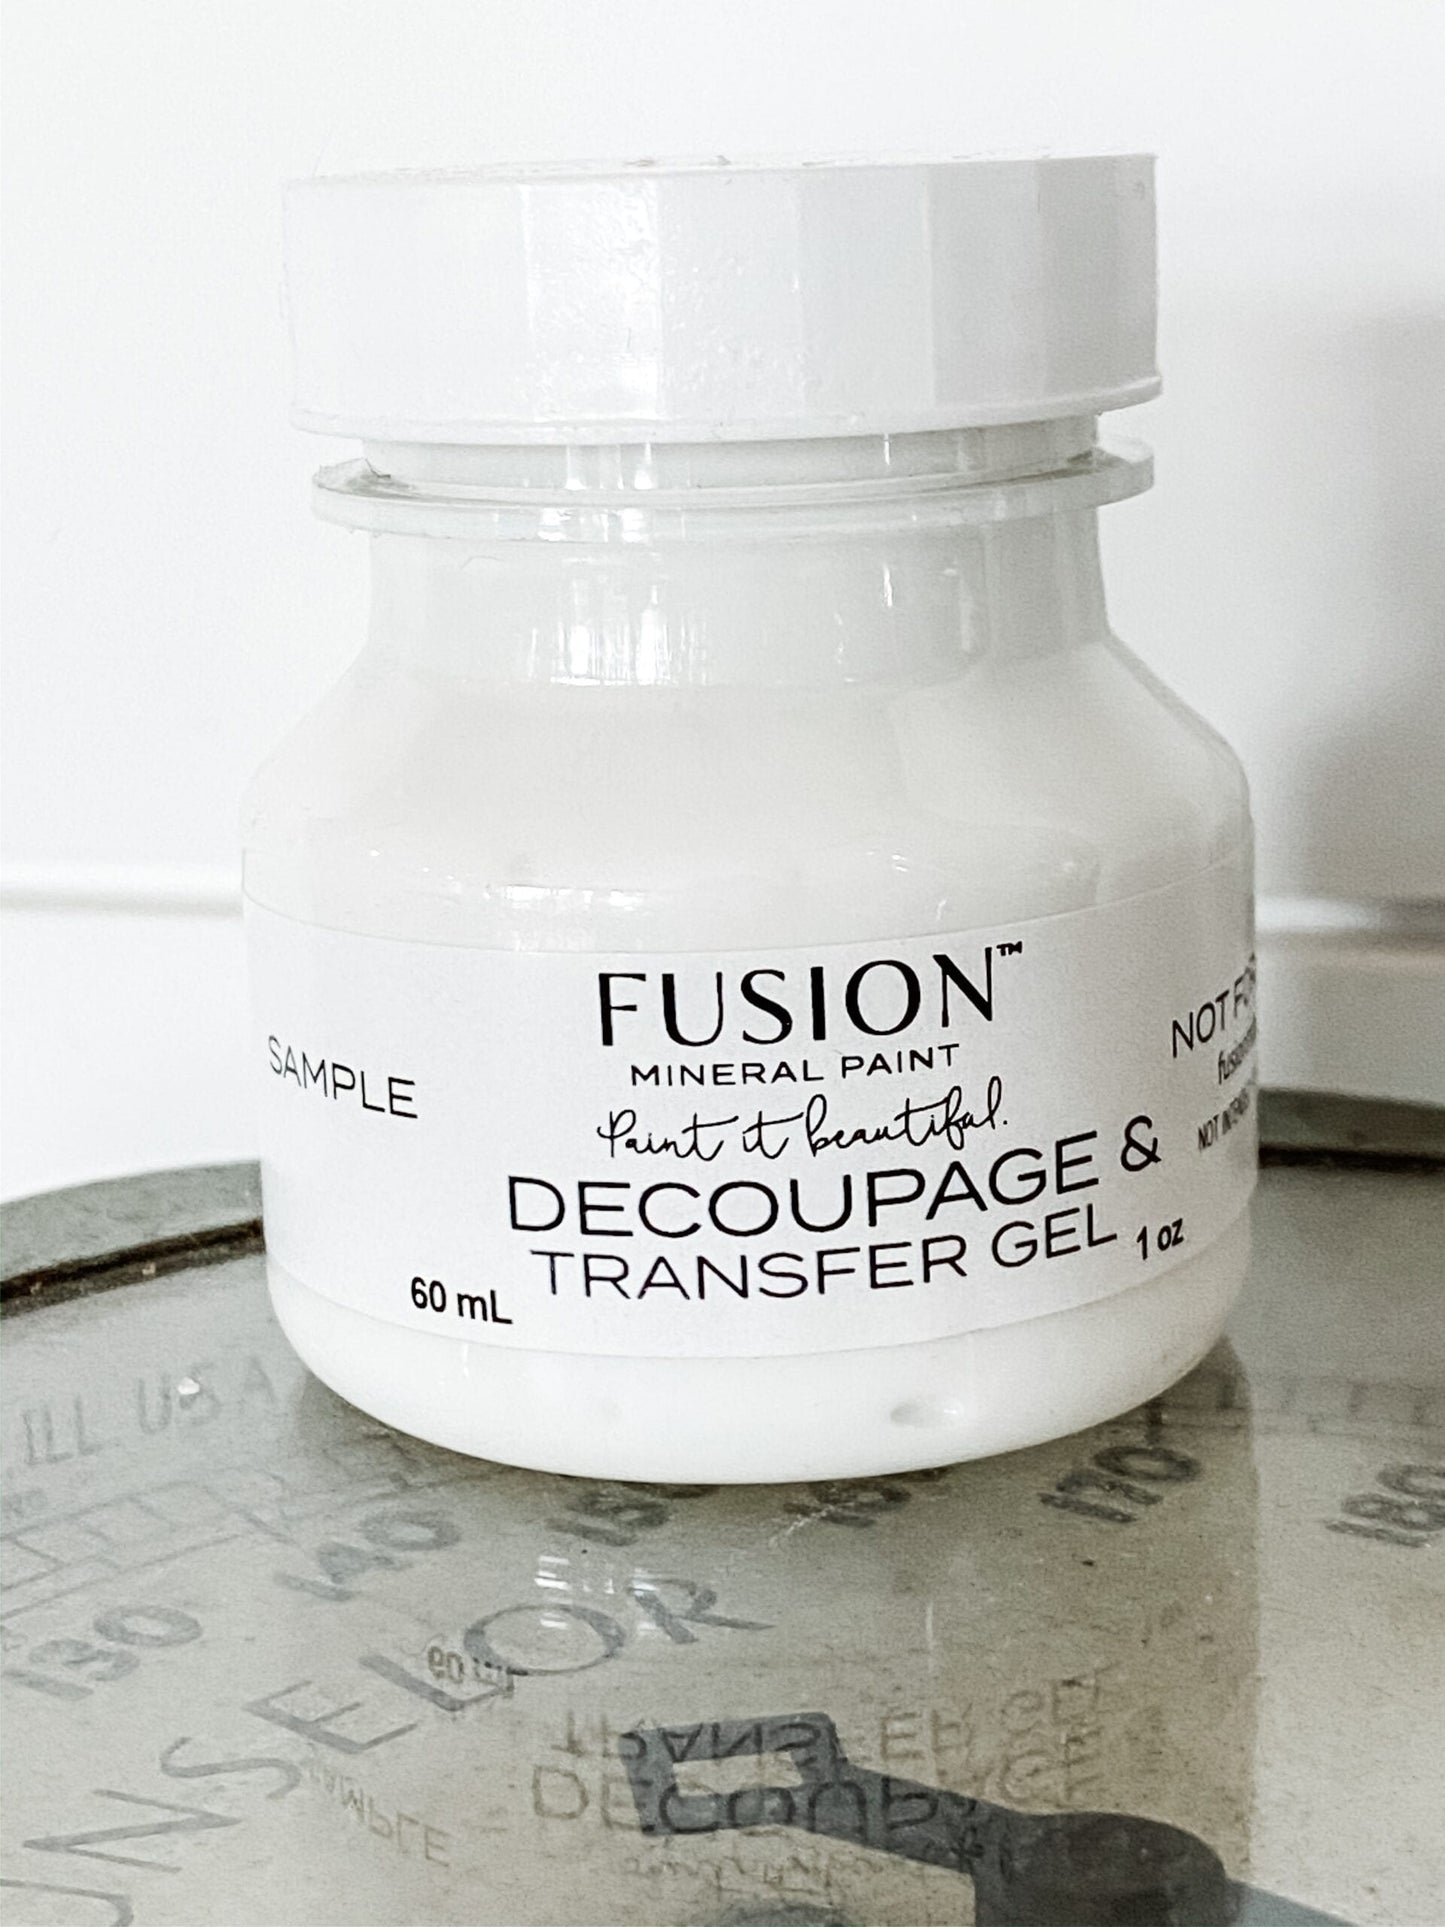 Decoupage & Transfer Gel - Fusion